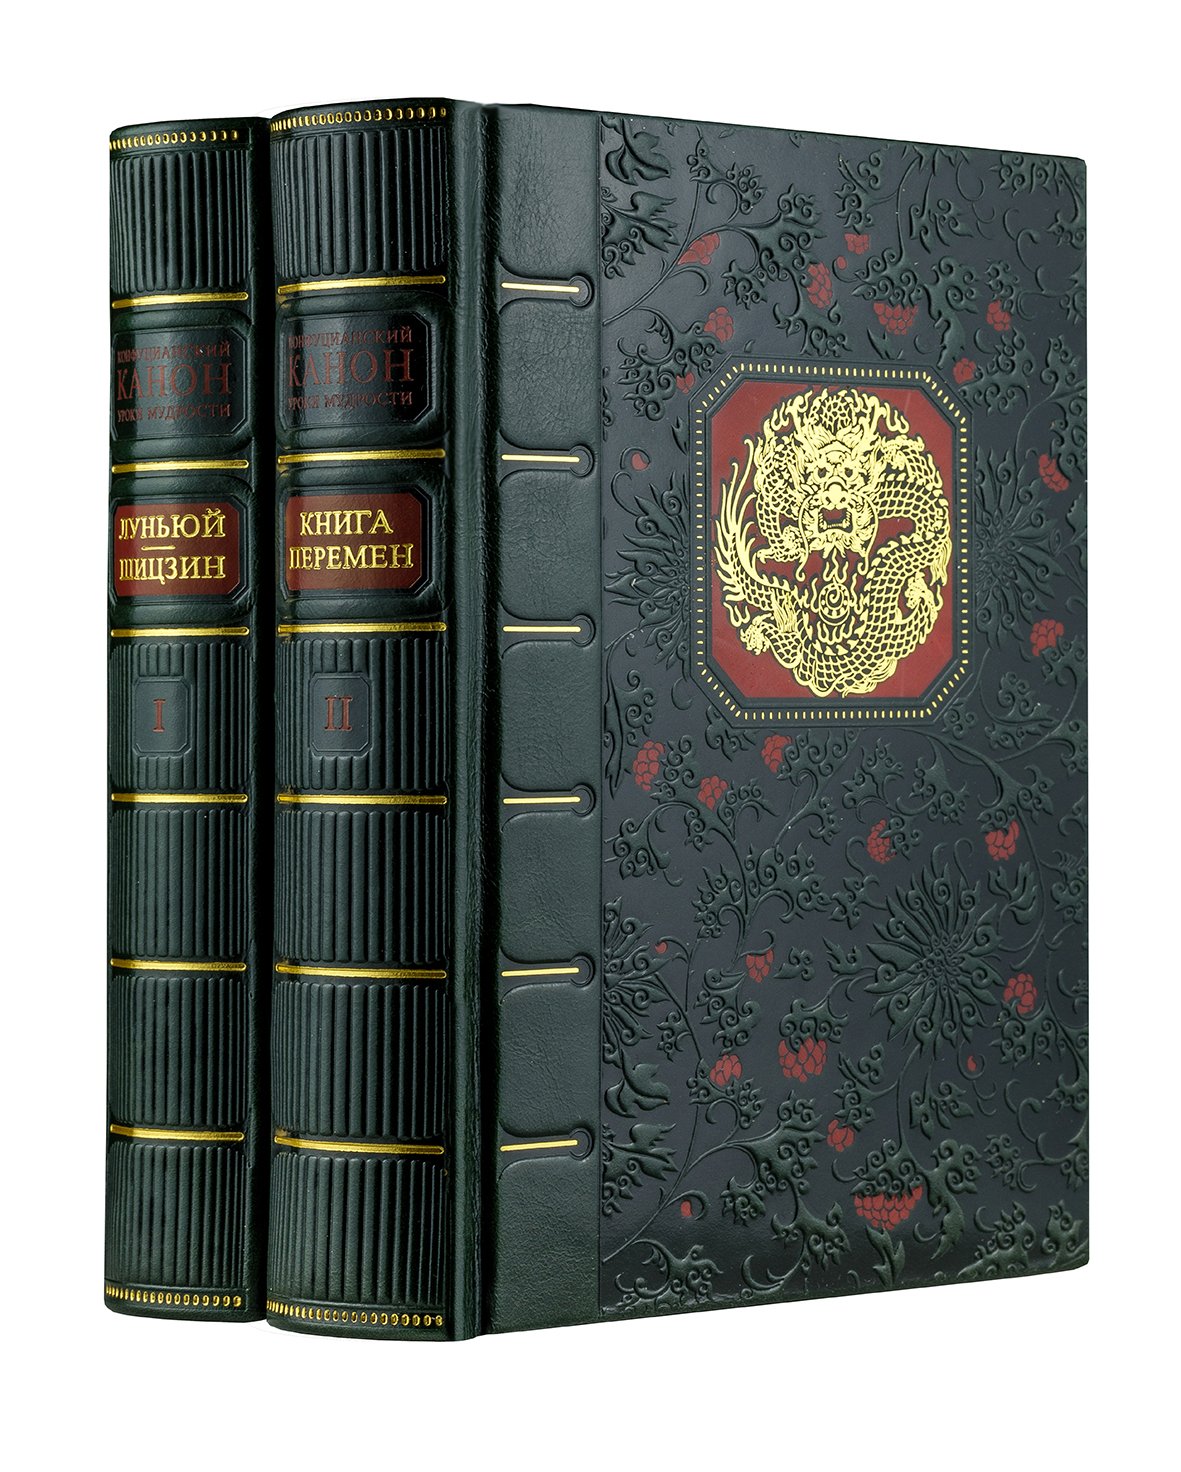 Конфуцианский канон в 2-х томах. Луньюй. Шизцин. Книга перемен.